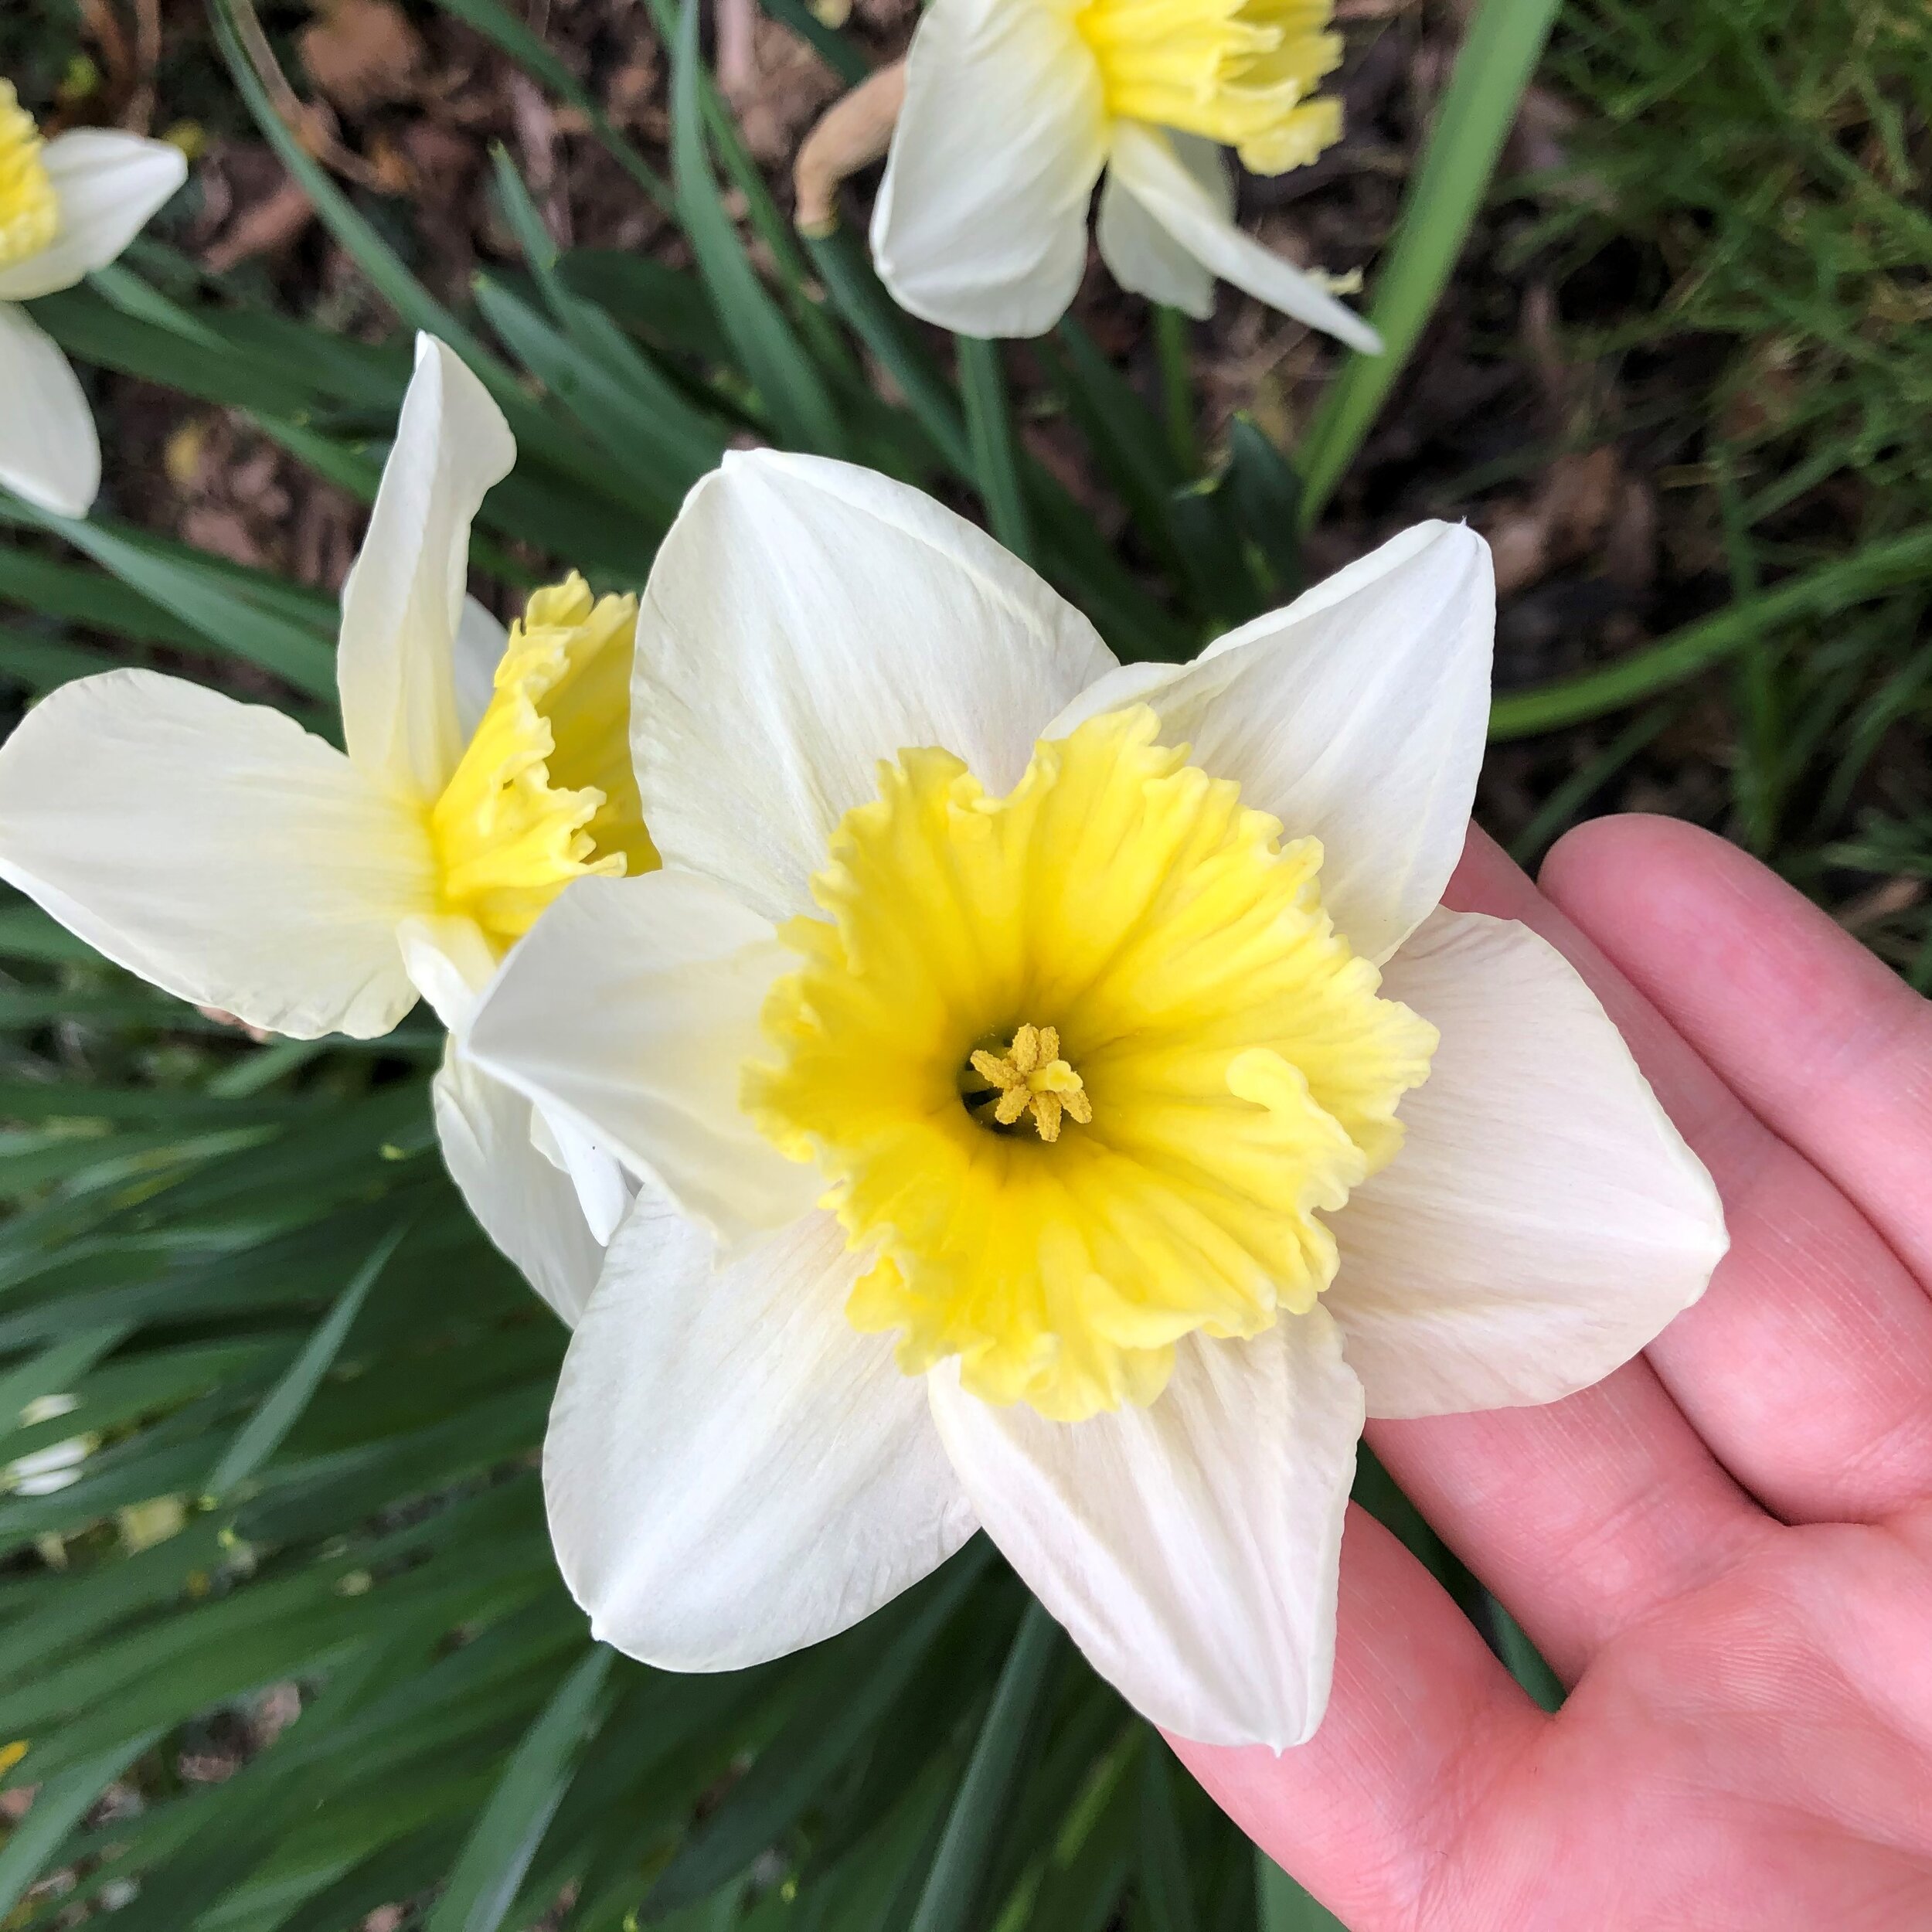 growing daffodils.jpg